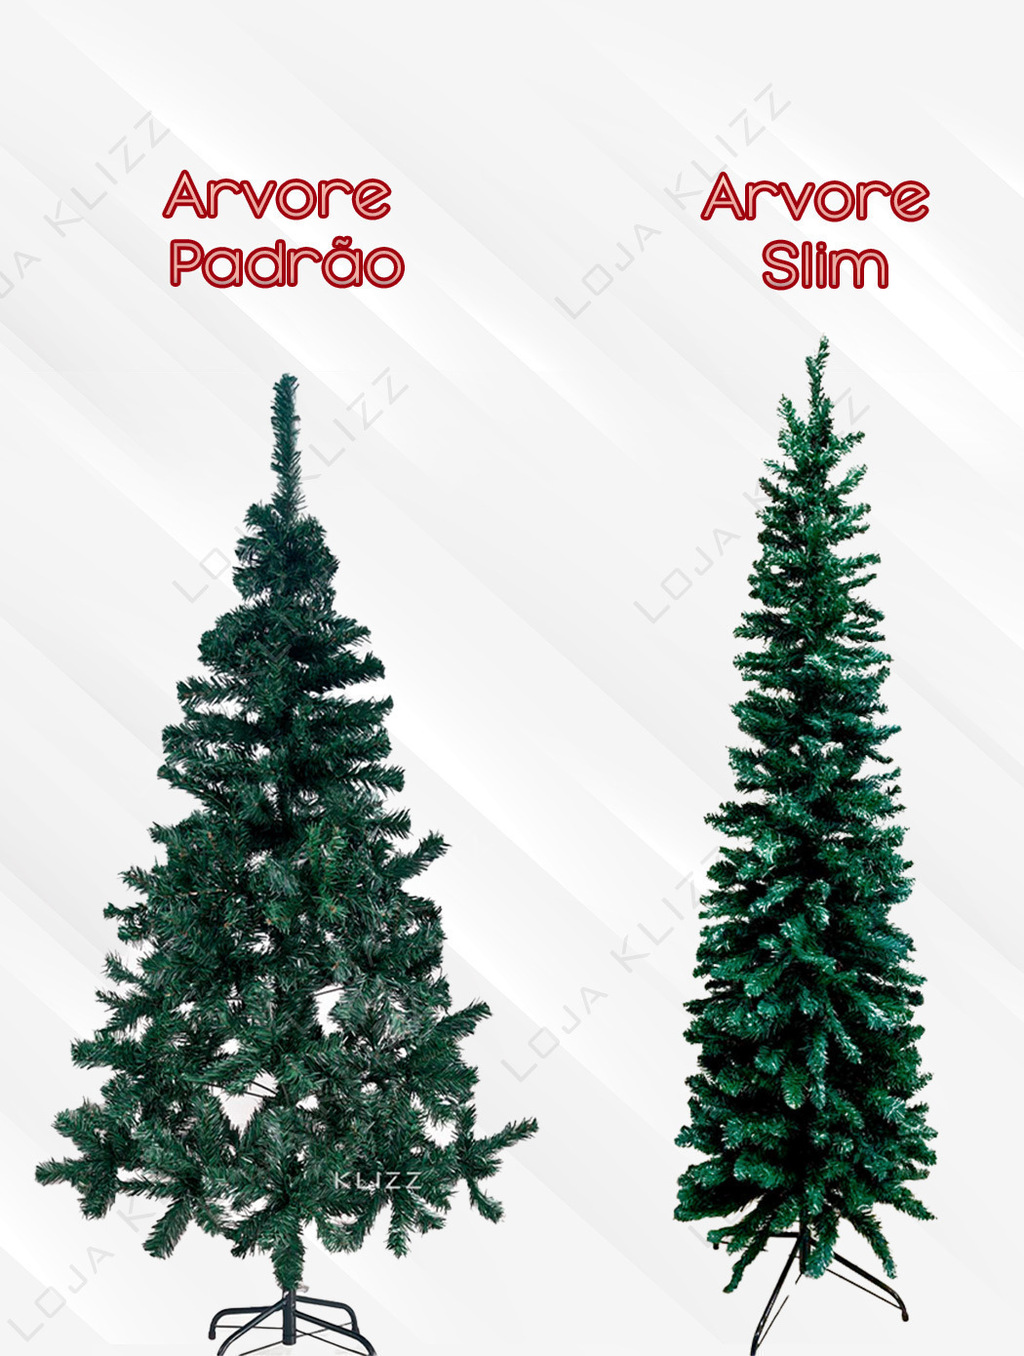 Árvore De Natal Grande Artificial Luxo 180 Cm Cheia